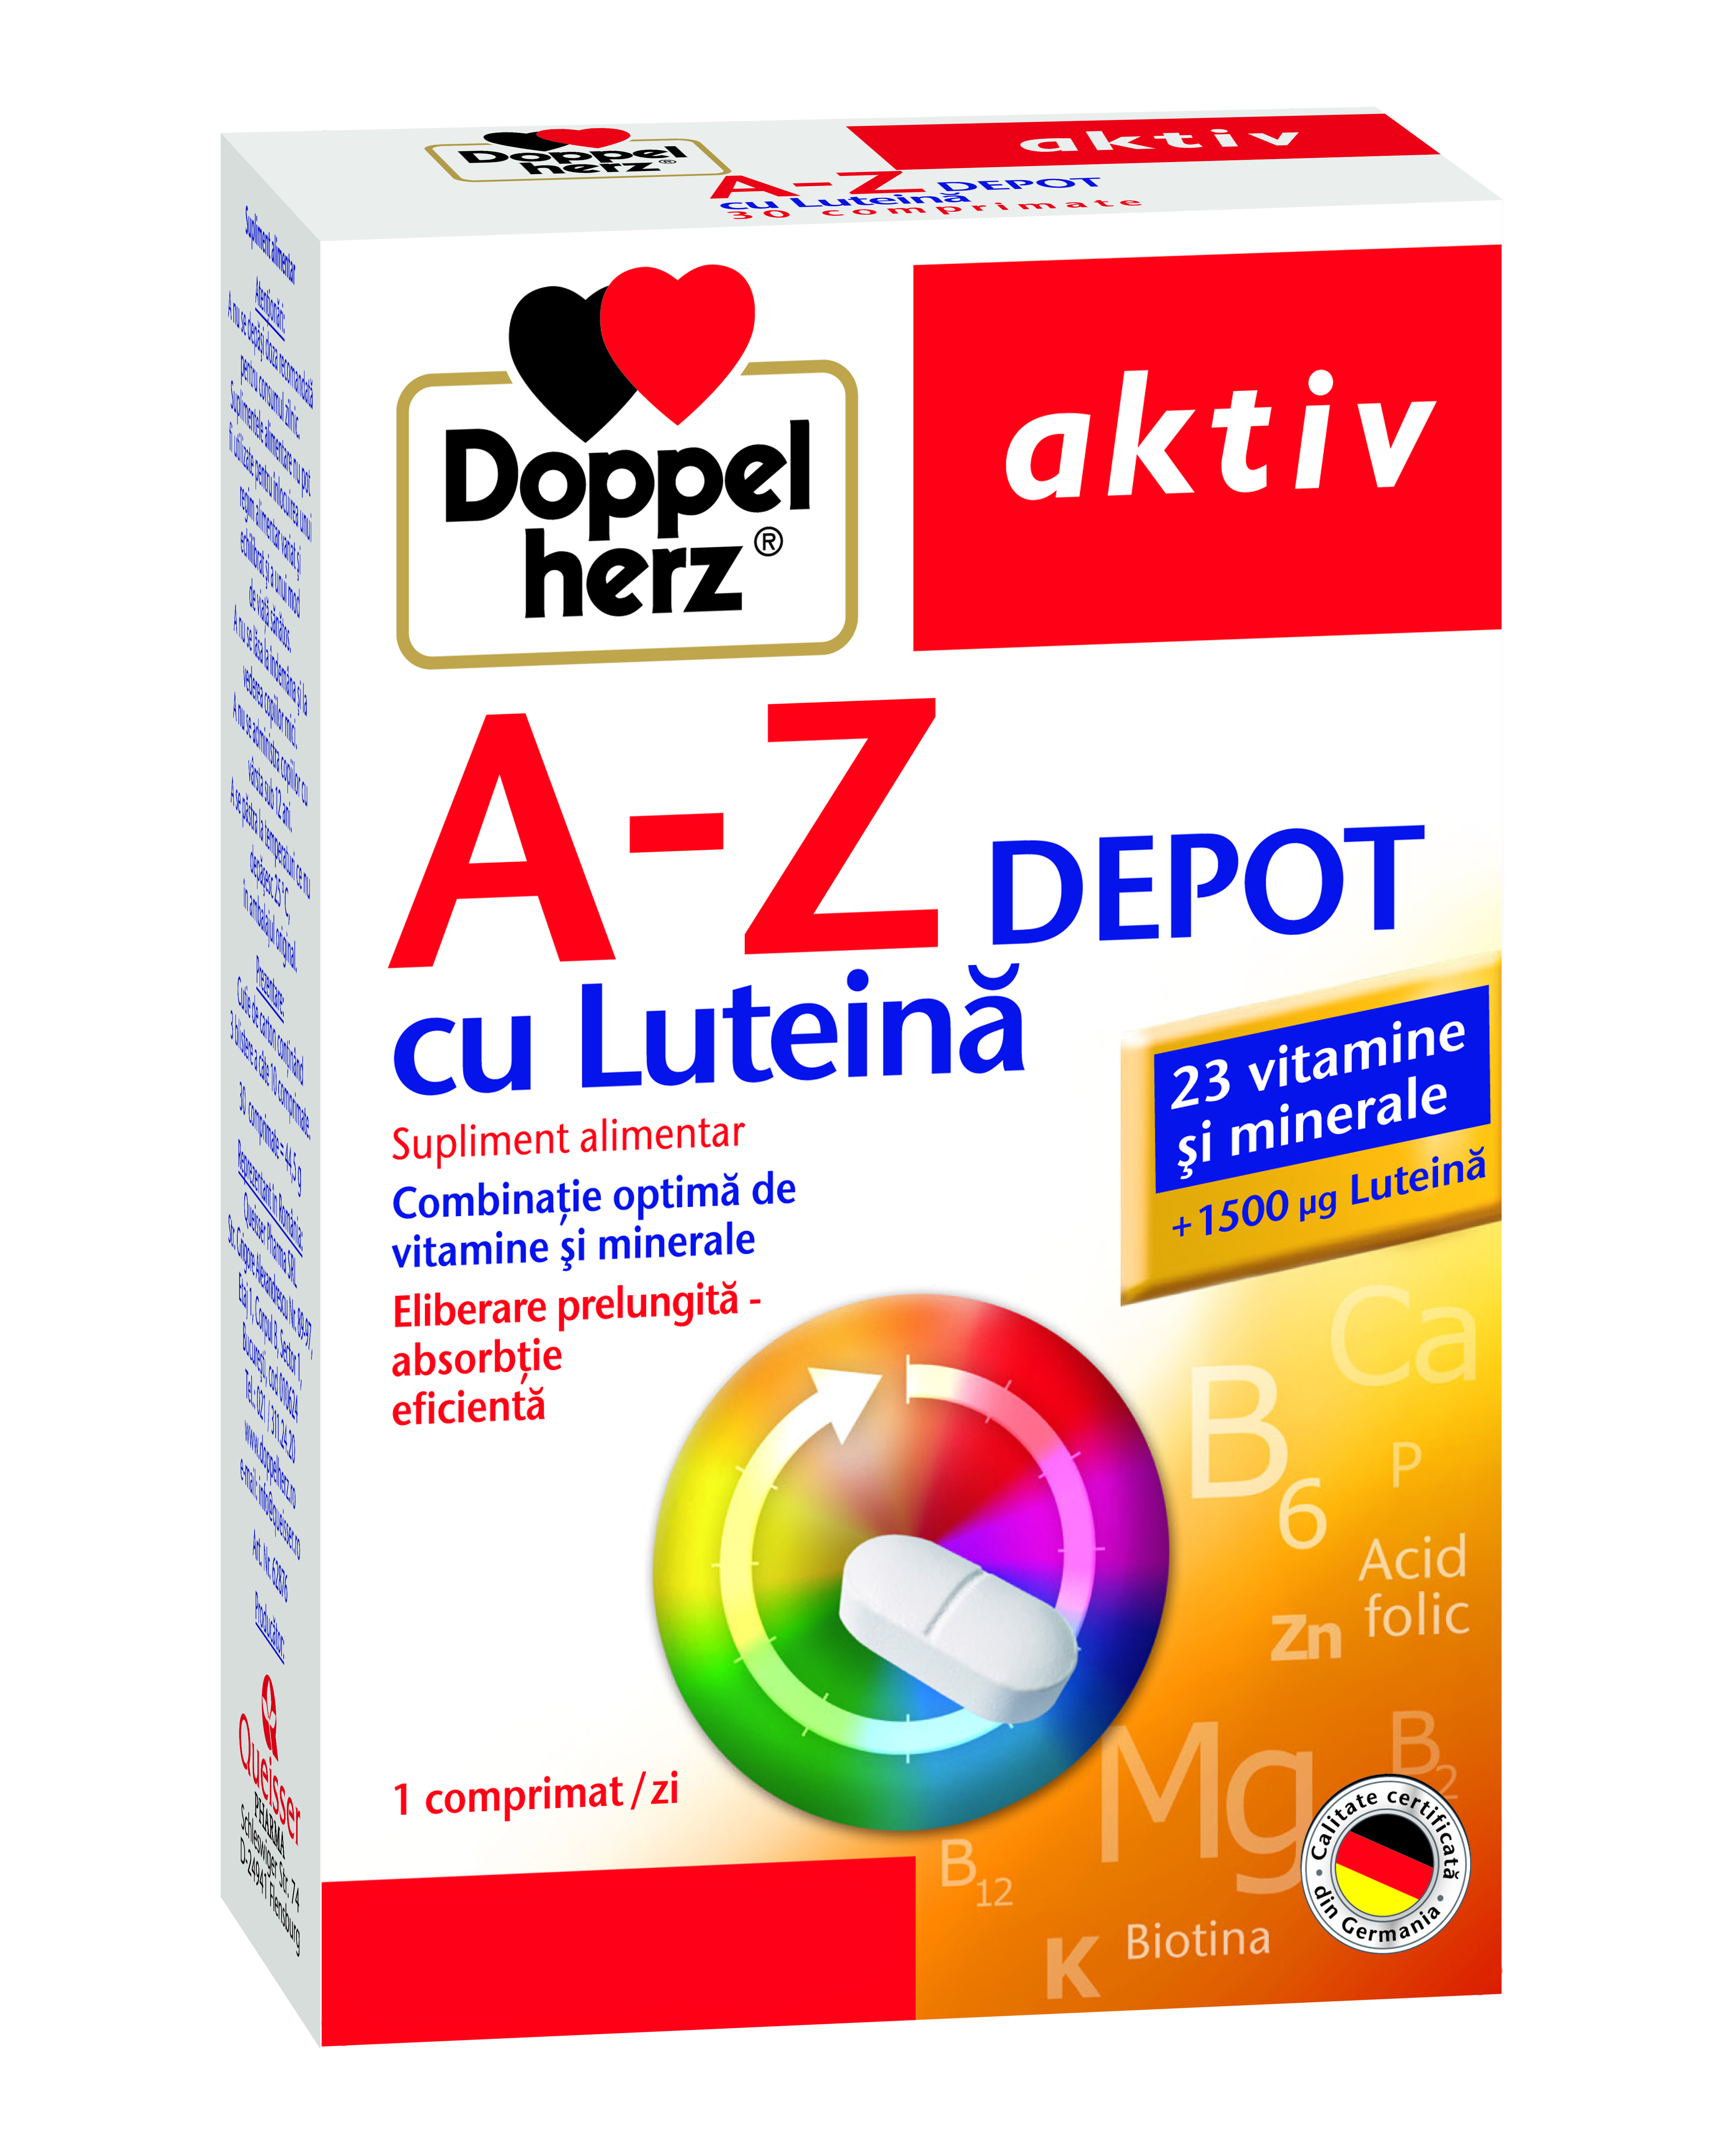 Uz general - Doppelherz Aktiv A-Z DEPOT cu Luteină, 30 comprimate, sinapis.ro